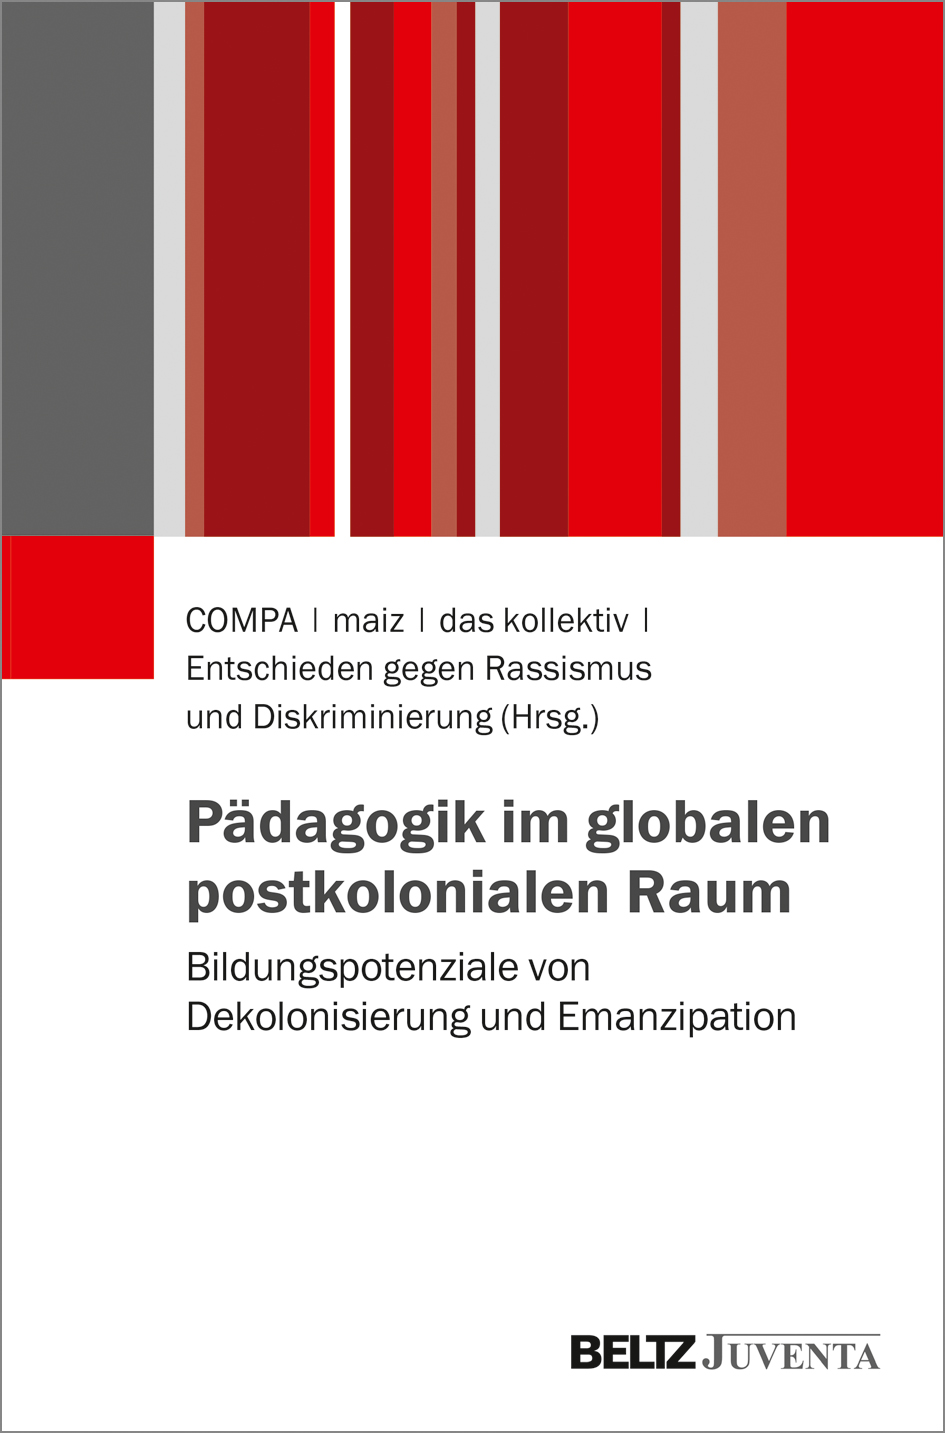 COMPA et al. (Hg.): Pädagogik im globalen postkolonialen Raum, 2019